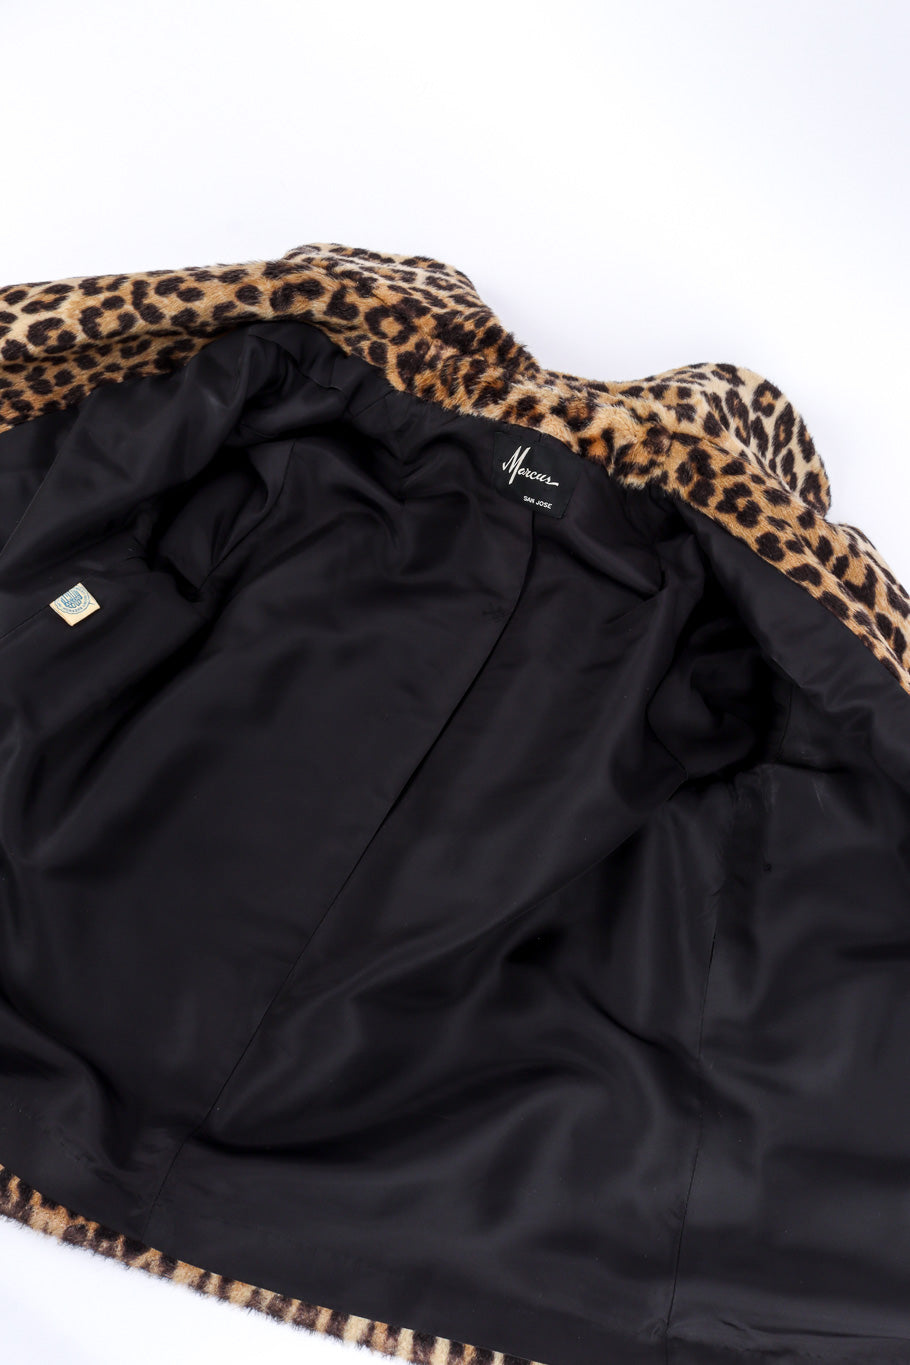 Vintage Marcus Leopard Print Jacket view of lining @recessla